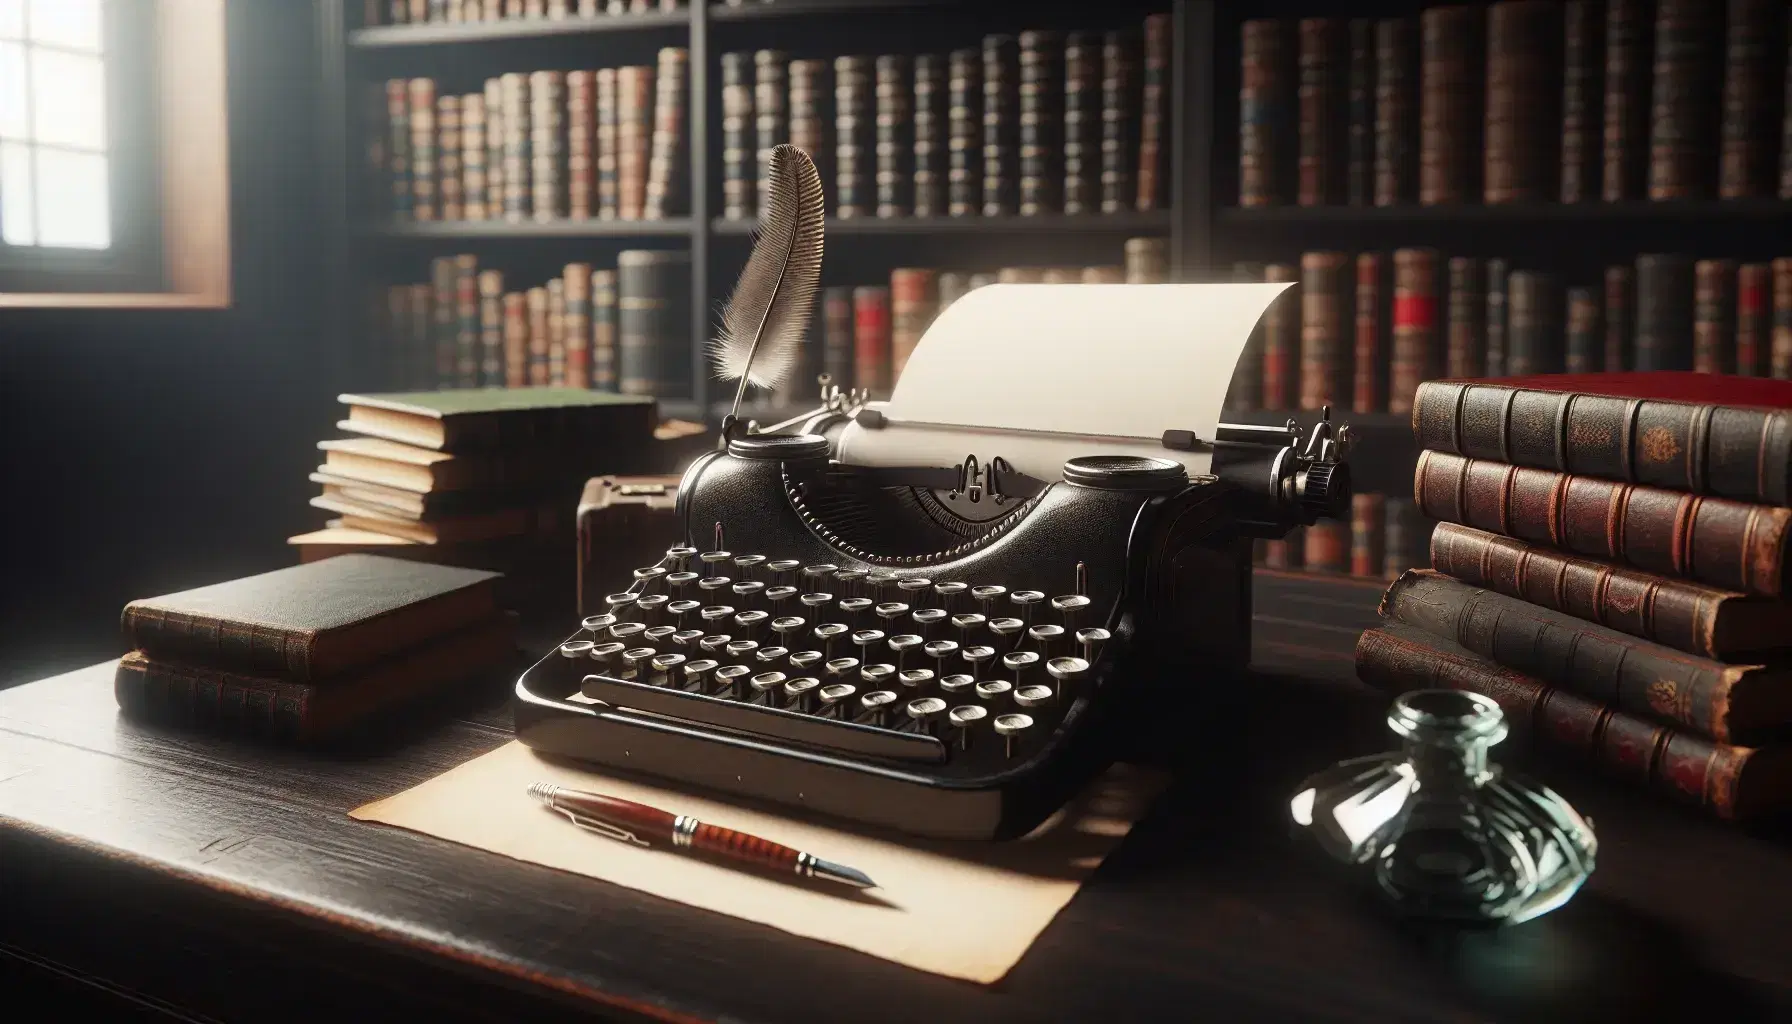 Máquina de escribir antigua con teclas blancas sobre mesa de madera oscura, papel en blanco, tintero de cristal y pluma junto a estantería de libros encuadernados en cuero.